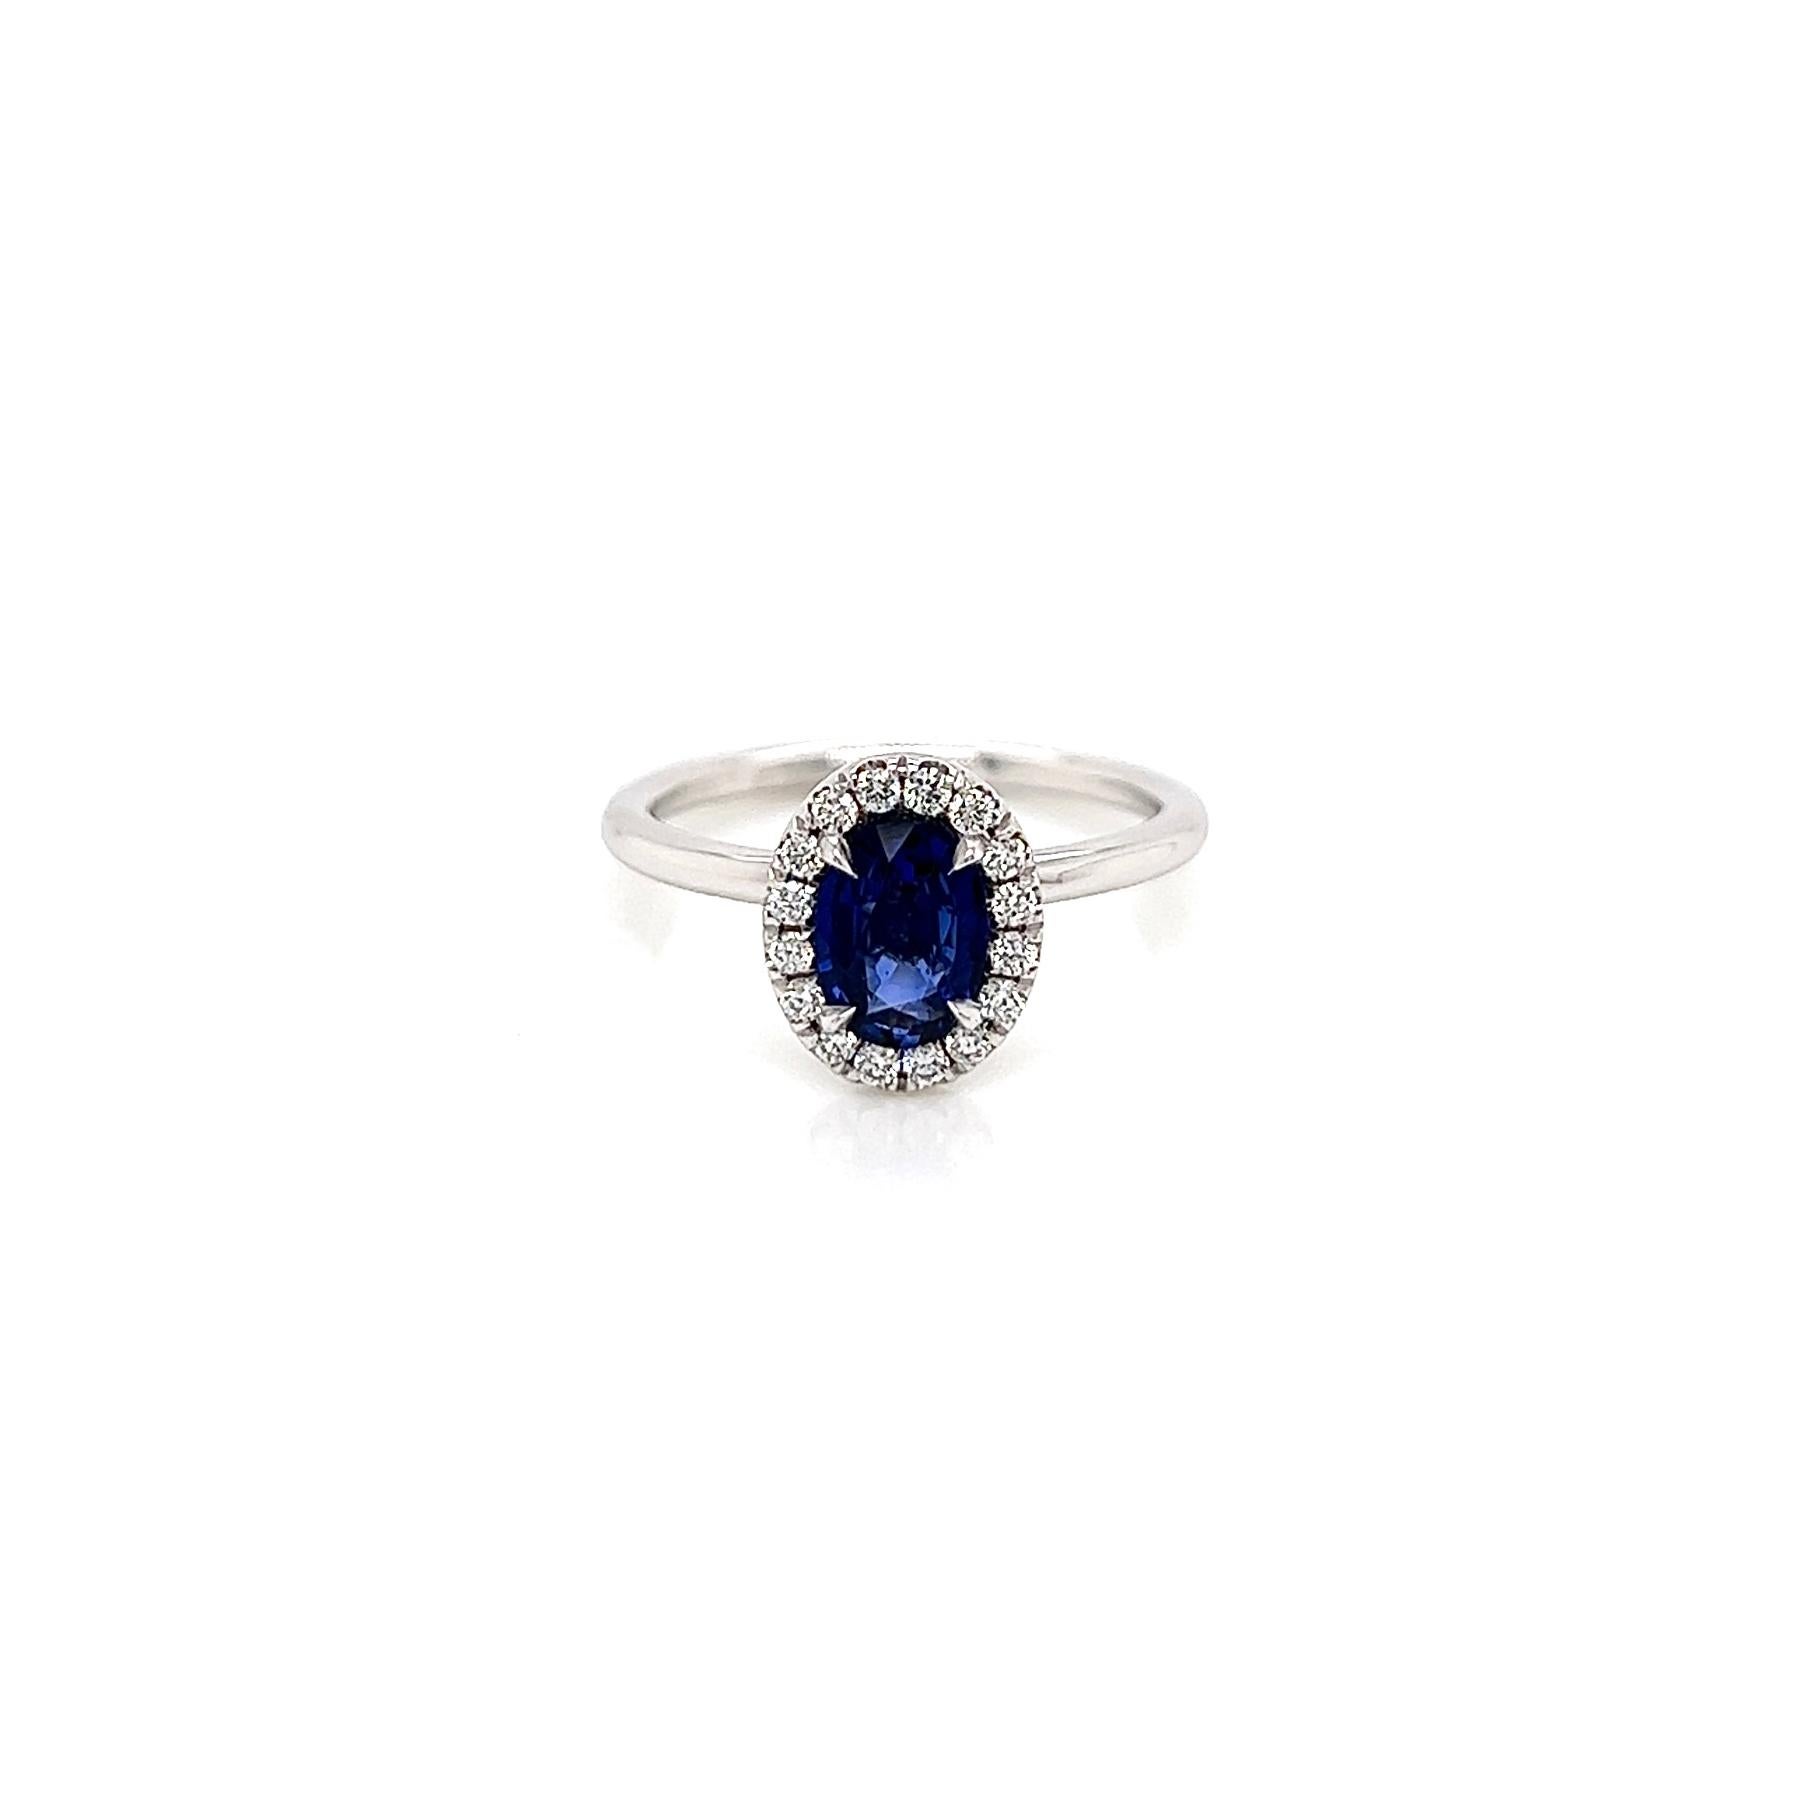 1.14 Total Carat Sapphire Diamond Ladies Halo Ring

-Metal Type: 18K White Gold
-0.90 Carat Oval Cut Blue Sapphire
-0.24 Carat Round Side Diamonds 
-Size 6.0

Made in New York City.